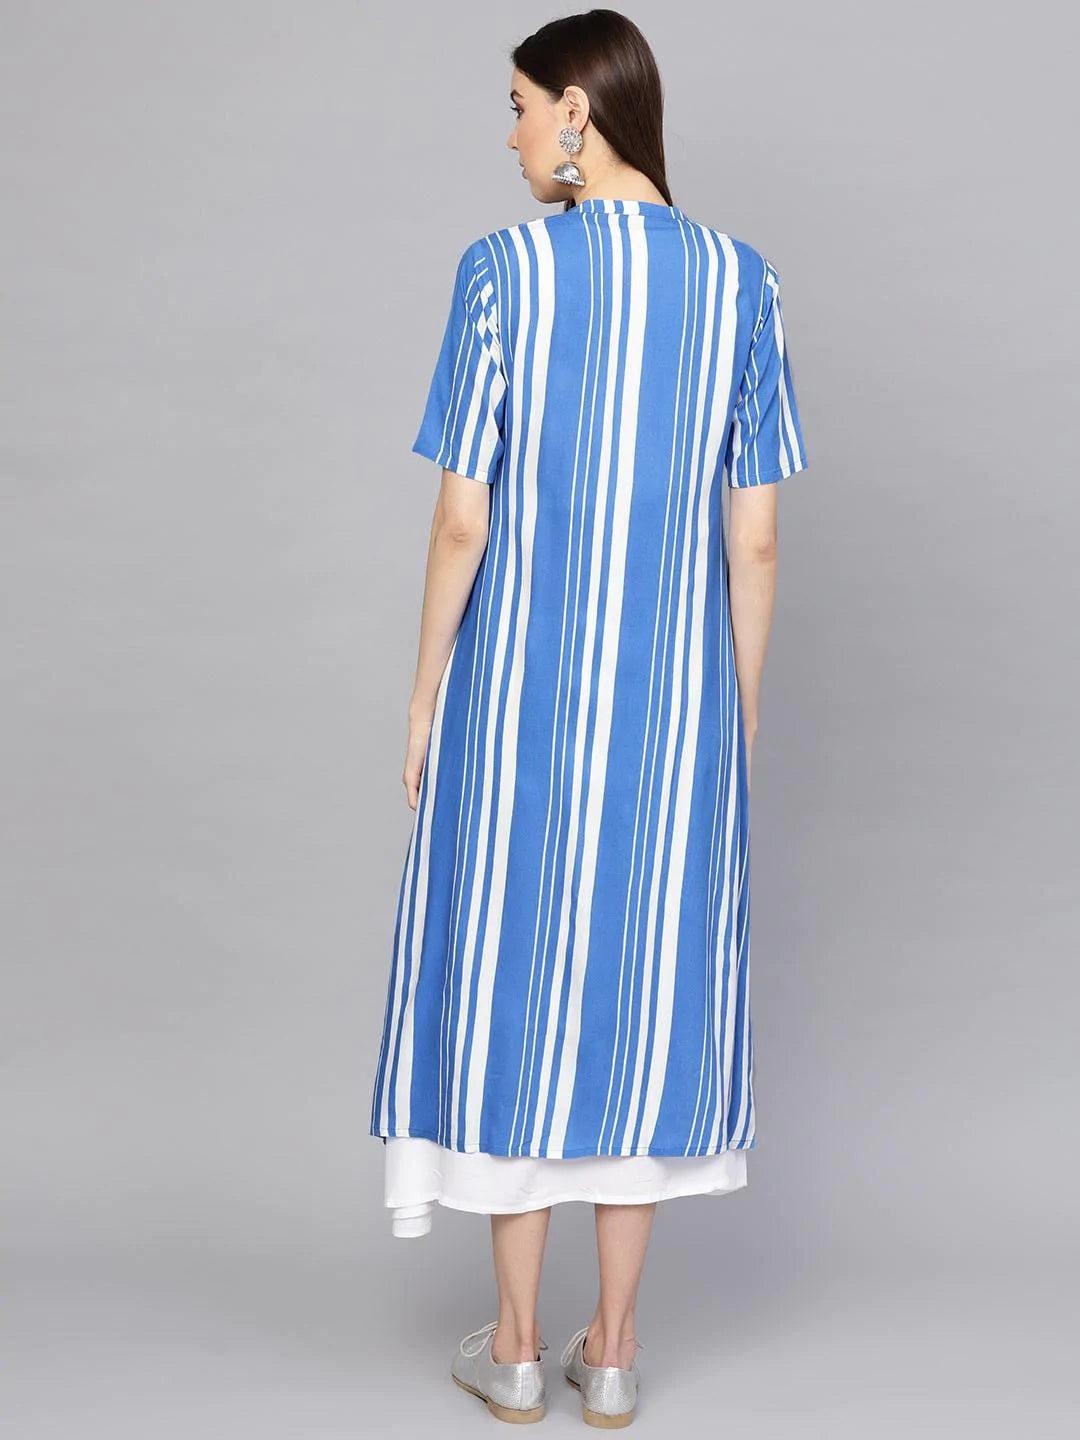 White Striped Cotton Dress With Jacket - ShopLibas